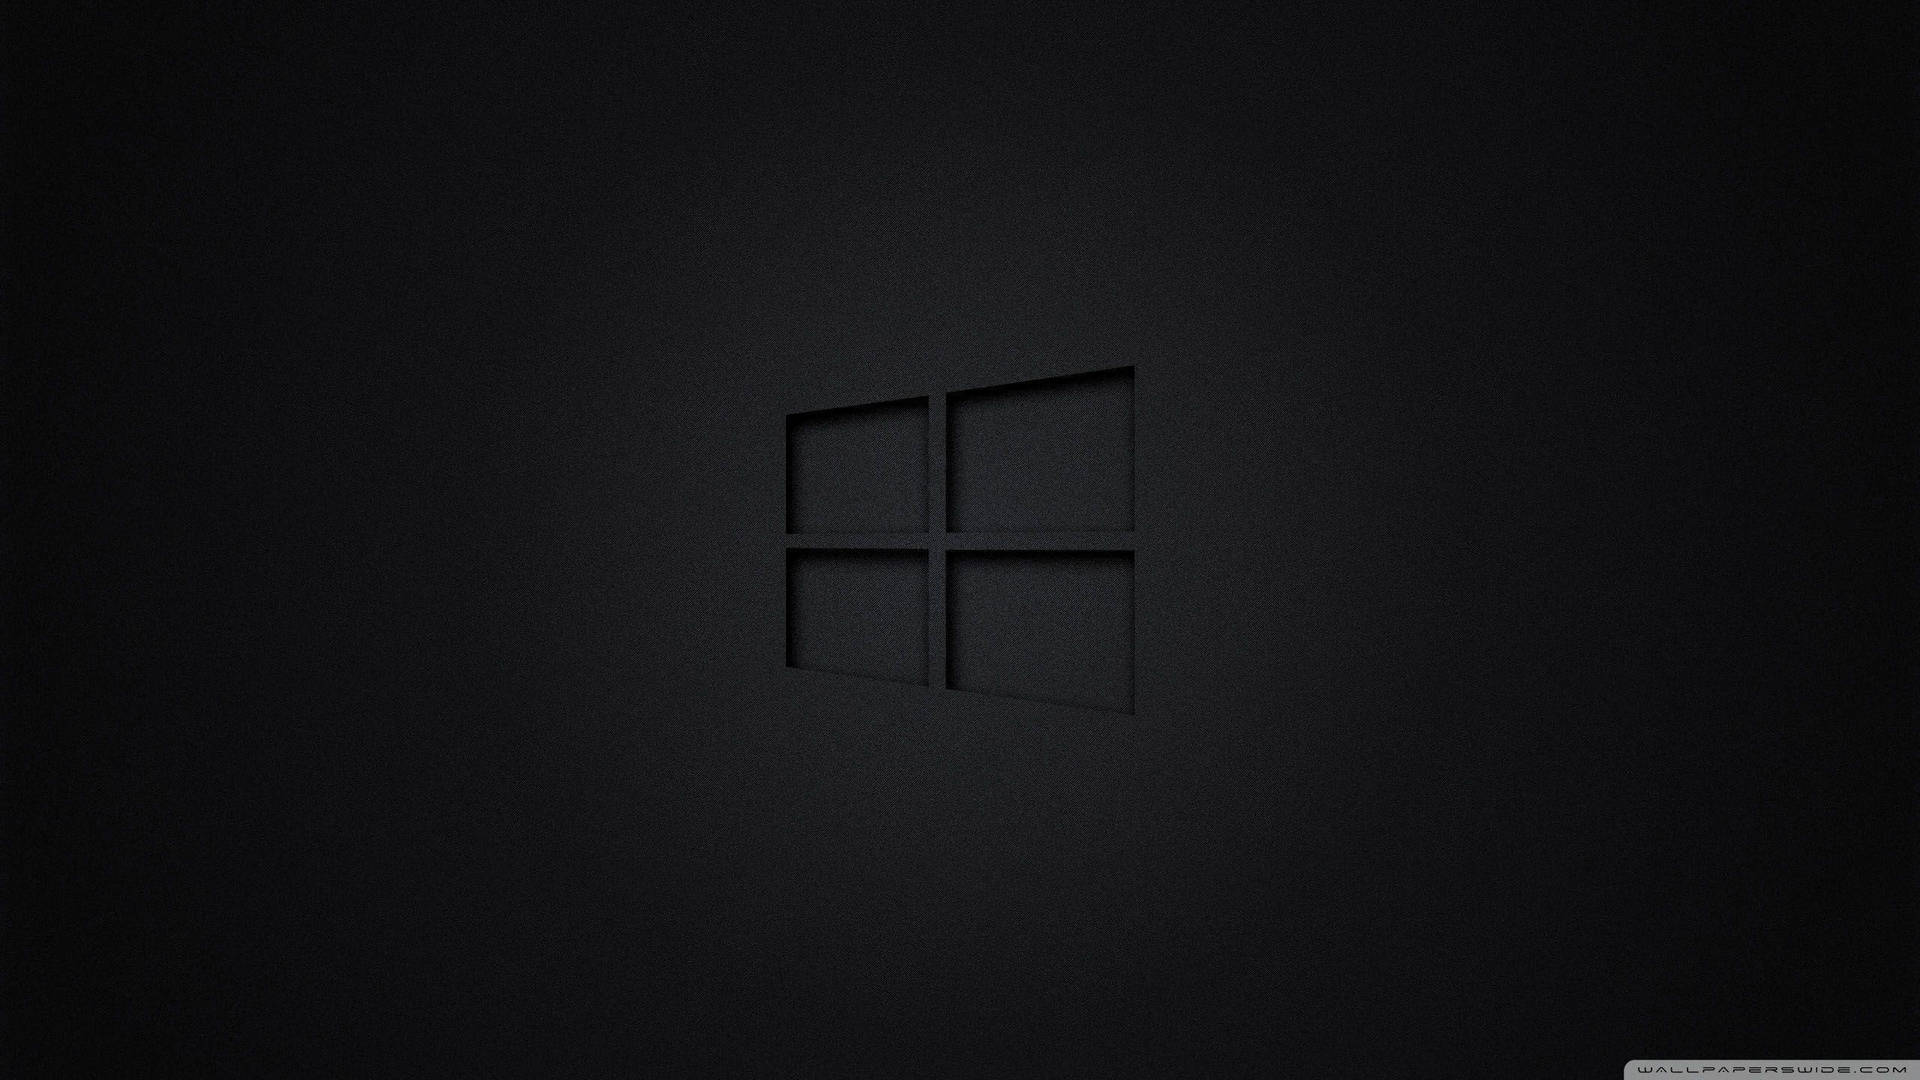 Black Windows Logo On A Dark Screen Background